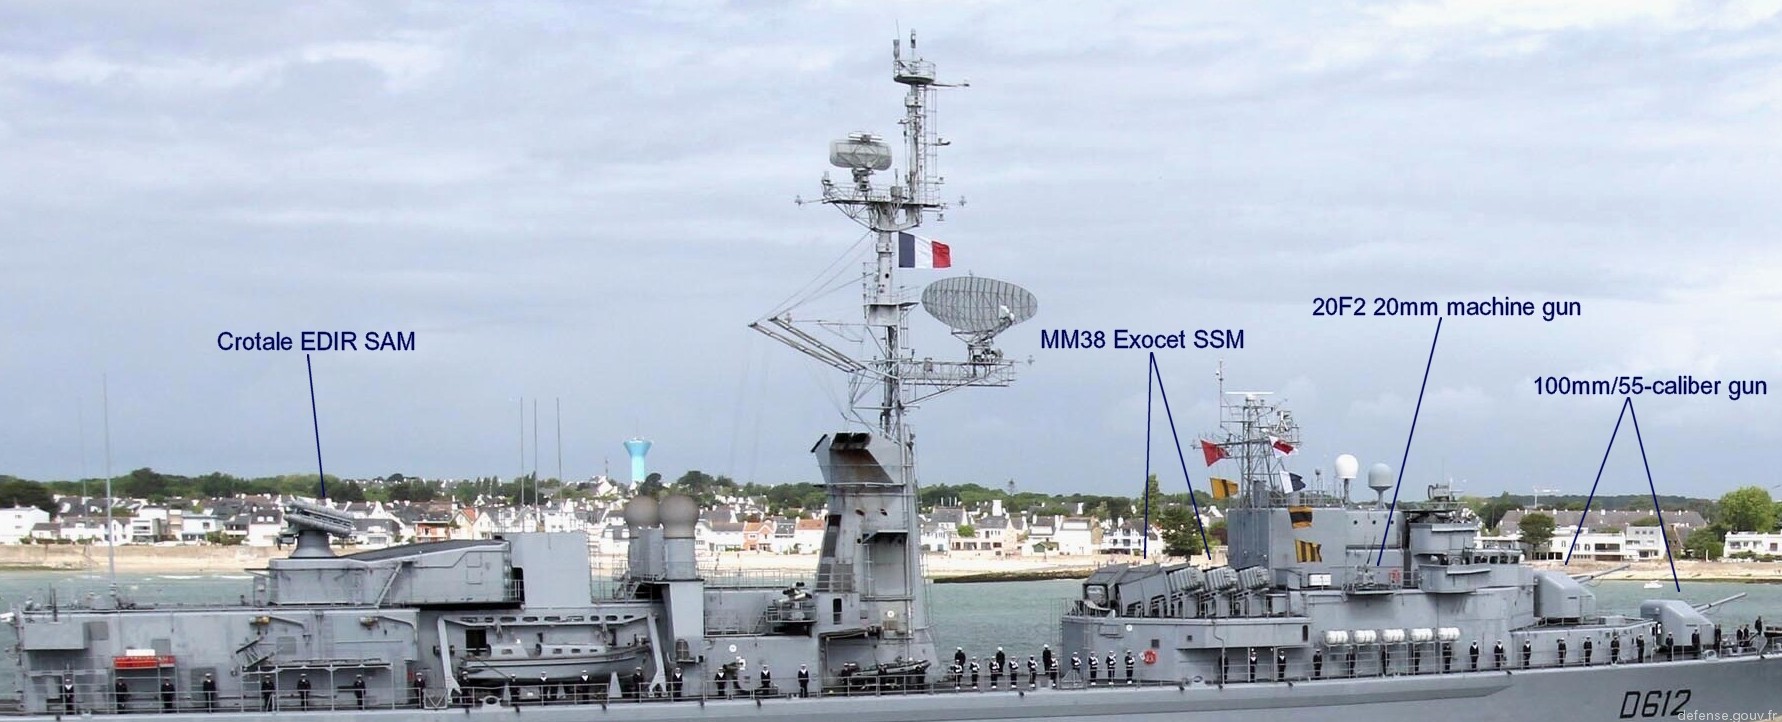 tourville class type f67 asw frigate destroyer french navy marine nationale armament crotale edir sam mm38 exocet ssm 100mm gun